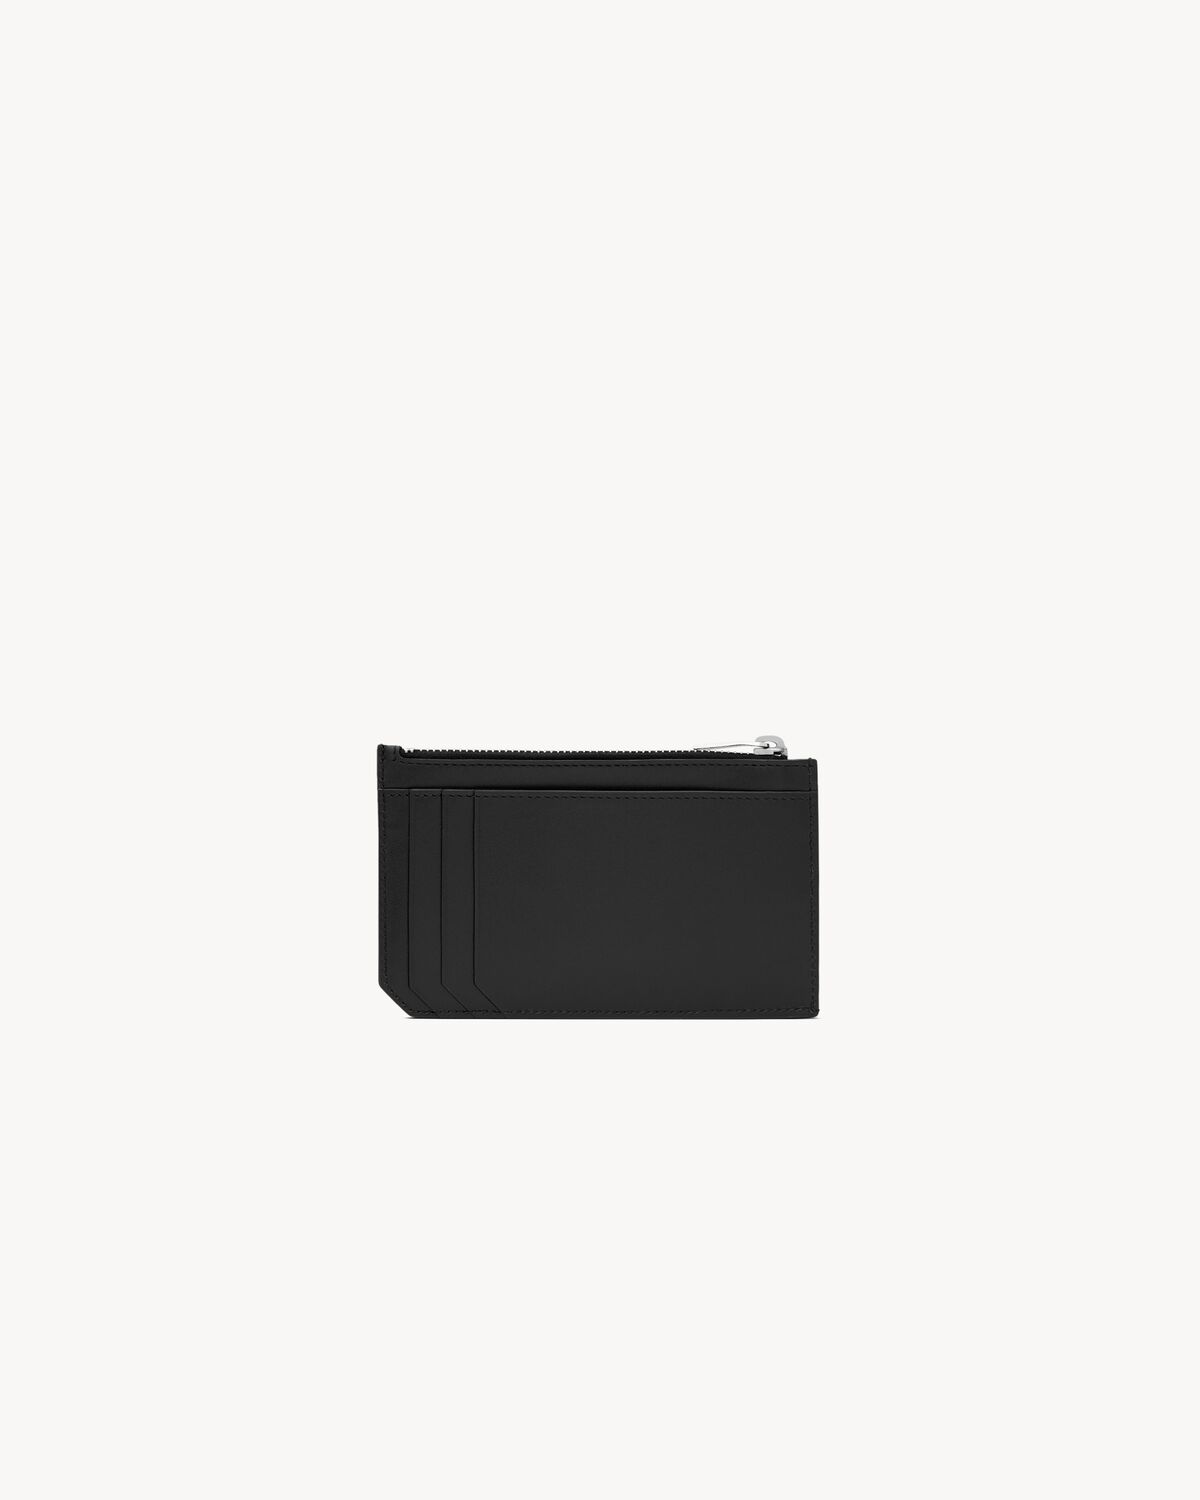 Saint Laurent Paris FRAGMENTS large zip card case in smooth leather